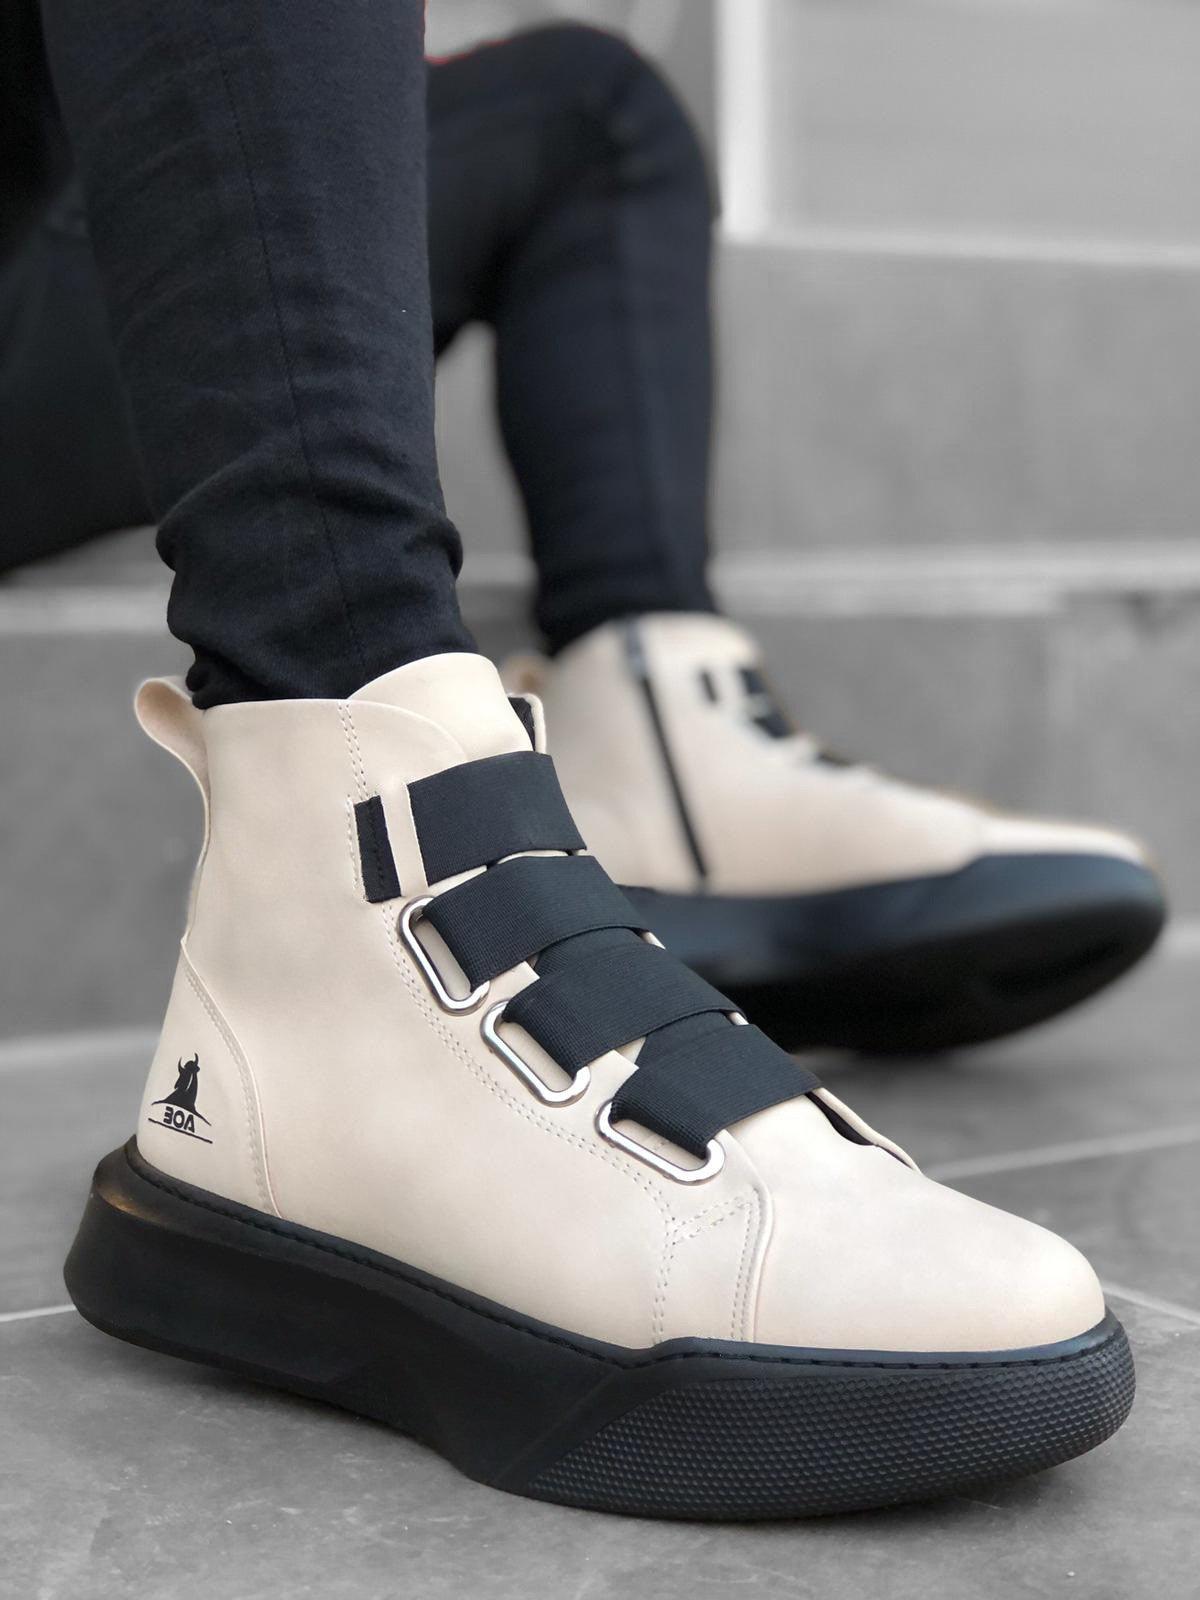 BA0142 Banded High Sole Black Sport Boots - Men Fashion Sneaker Shoes Men's Sneaker Boots - STREET MODE ™